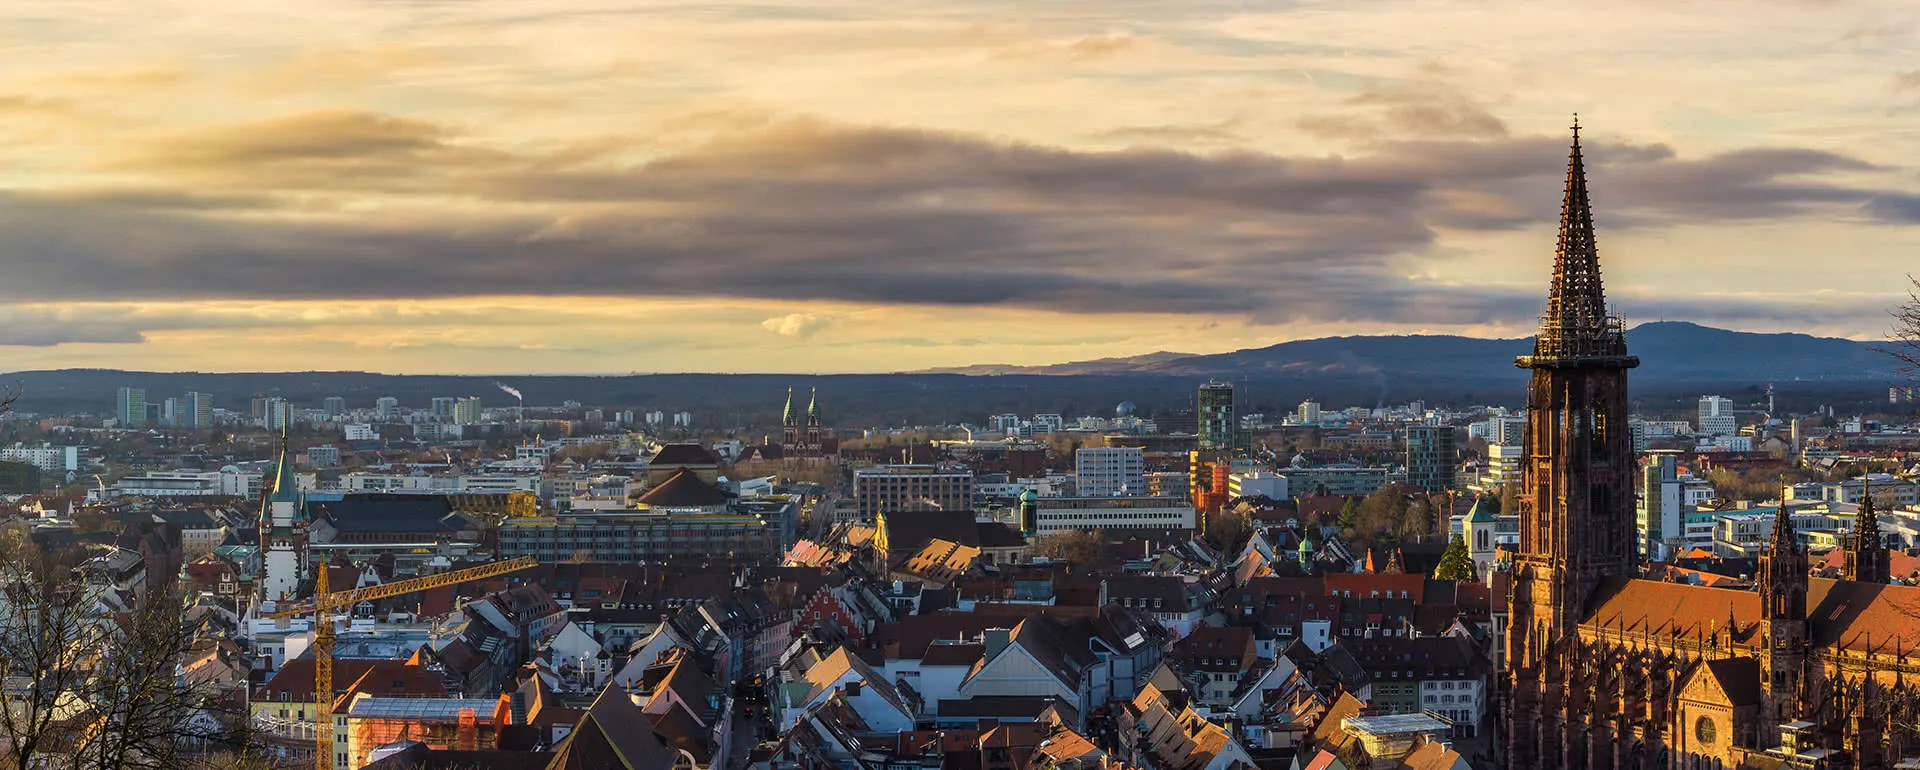 Freiburg im Breisgau - the destination with youth hostels